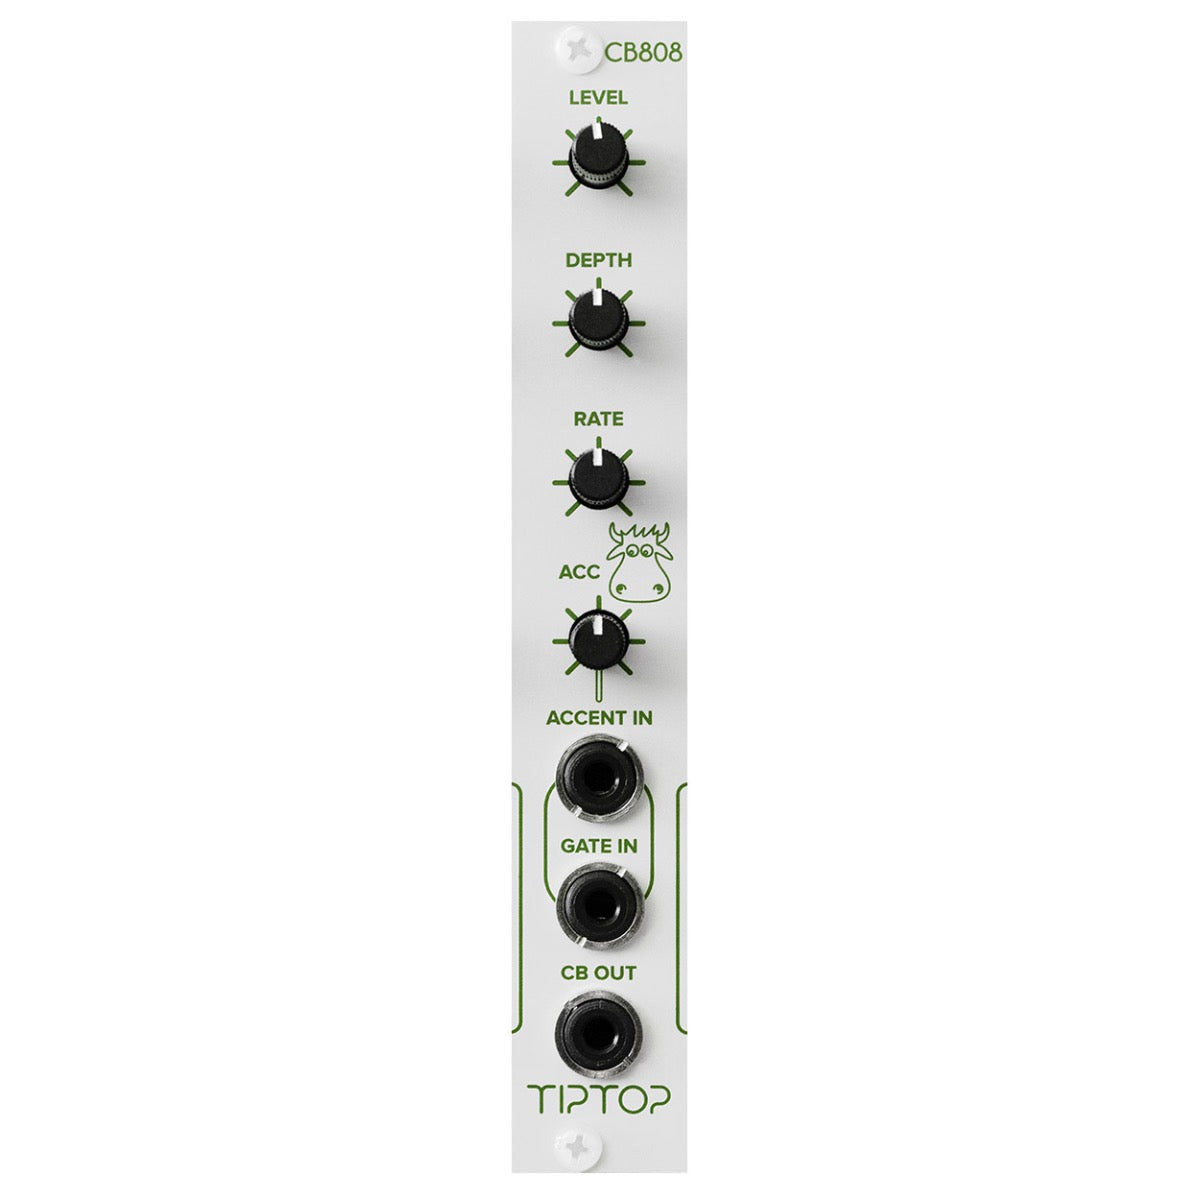 Tiptop Audio CB808 Analog Cowbell Drum Module